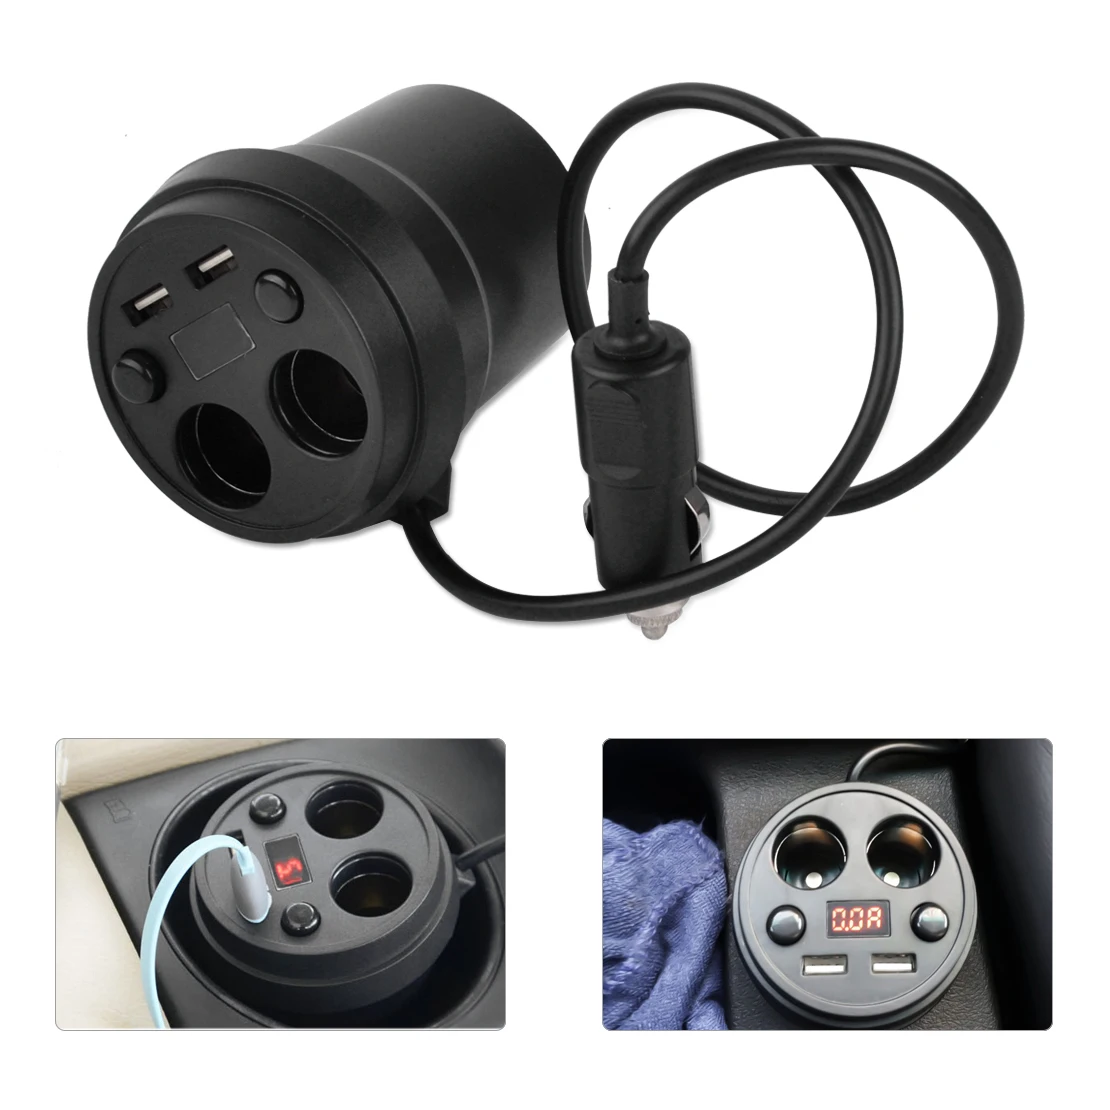 DWCX ABS& Metal 2 гнезда прикуривателя чашка Dual USB авто зарядное устройство адаптер напряжения светодиодный дисплей для VW Audi BMW Kia